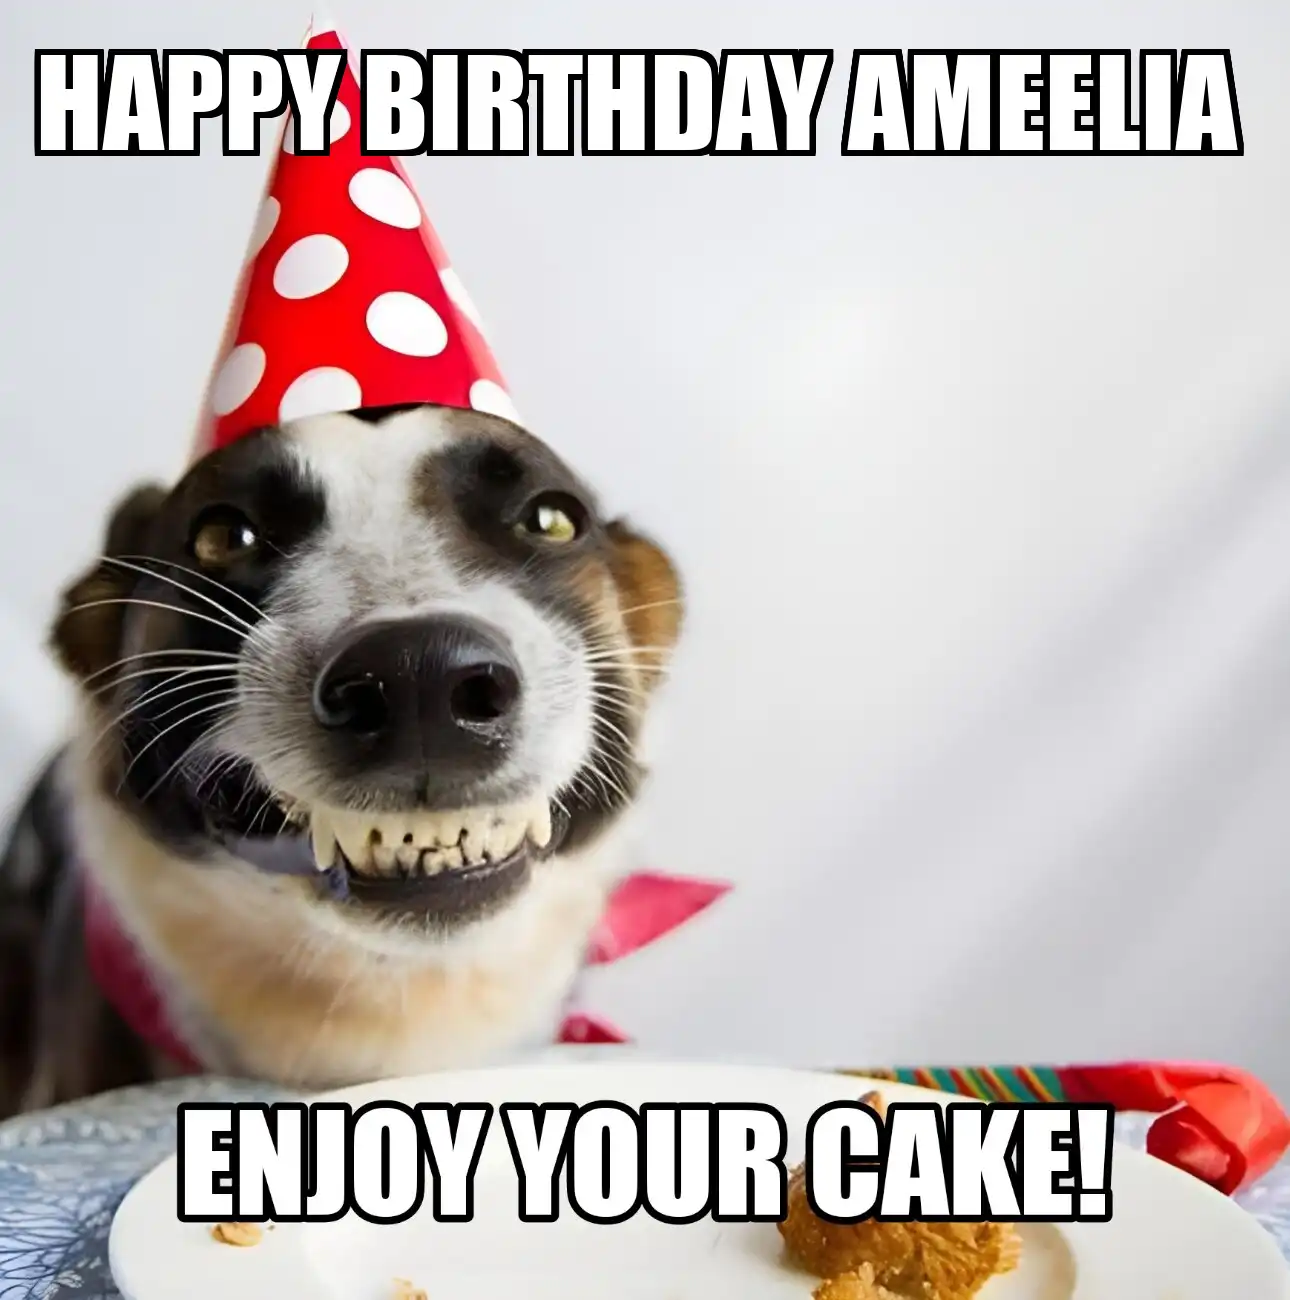 Happy Birthday Ameelia Enjoy Your Cake Dog Meme